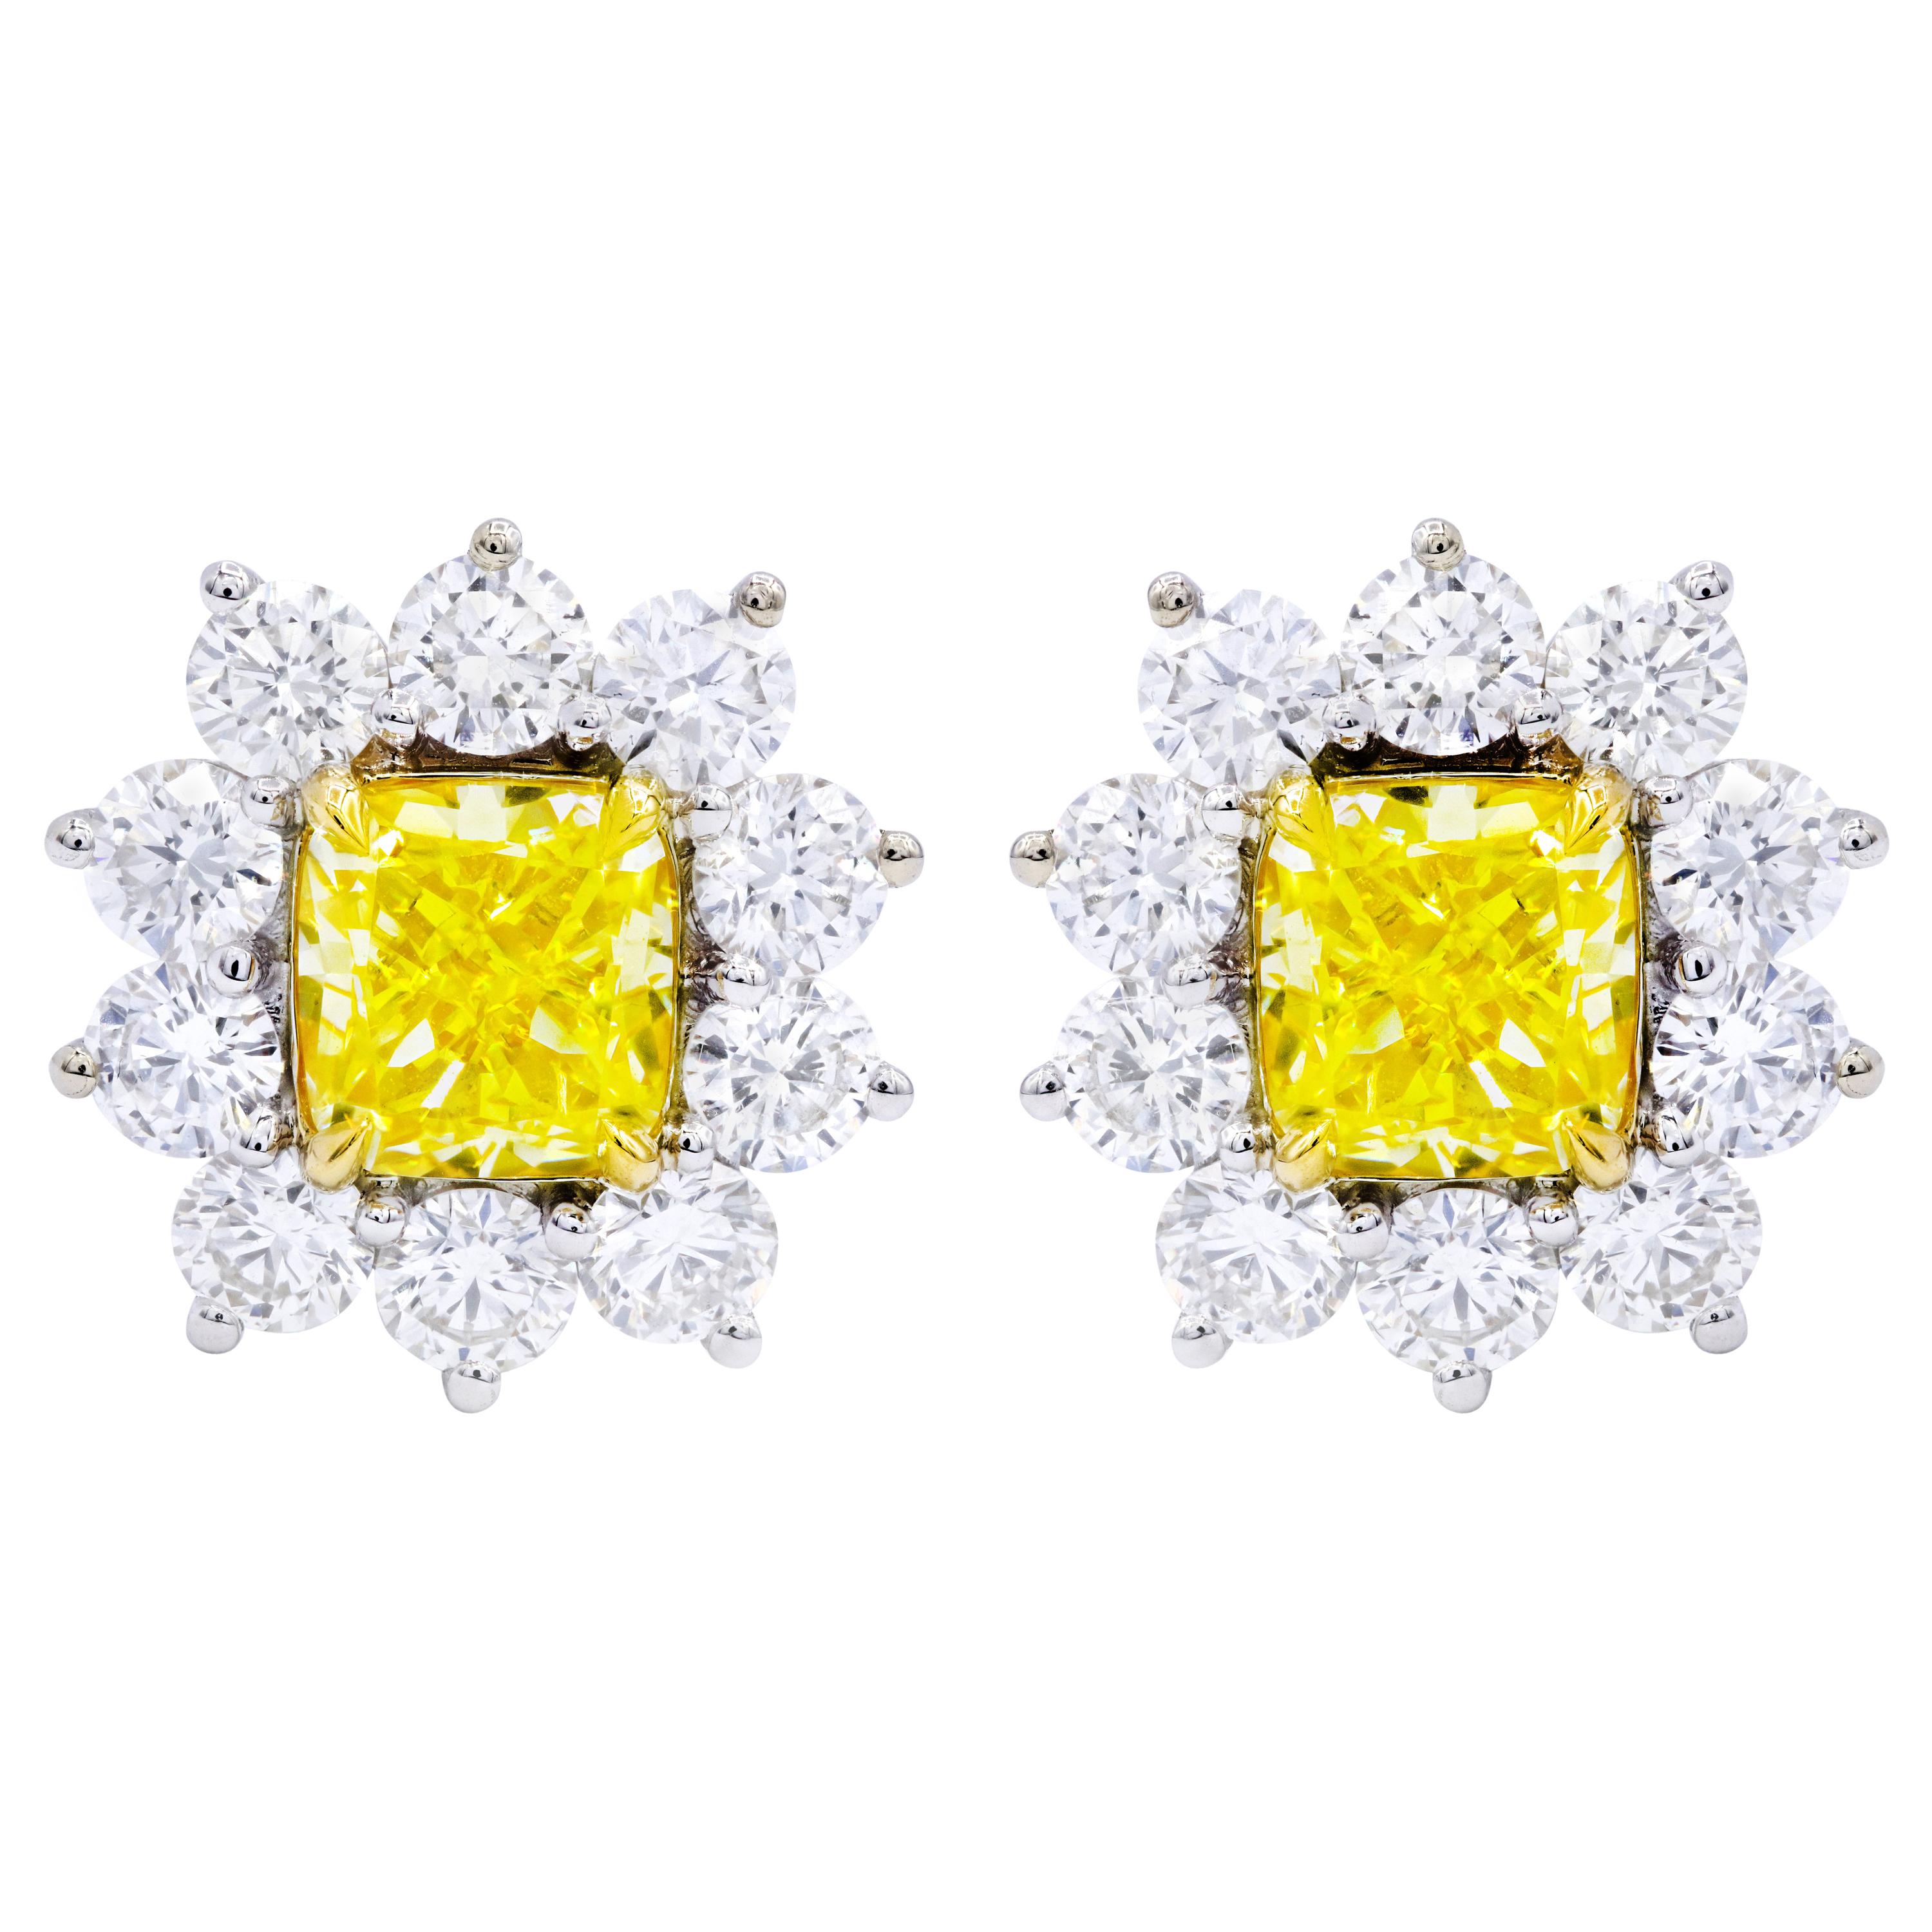 GIA Certified 3.46 Carat Cushion Cut Fancy Yellow Diamond Cluster Stud Earrings